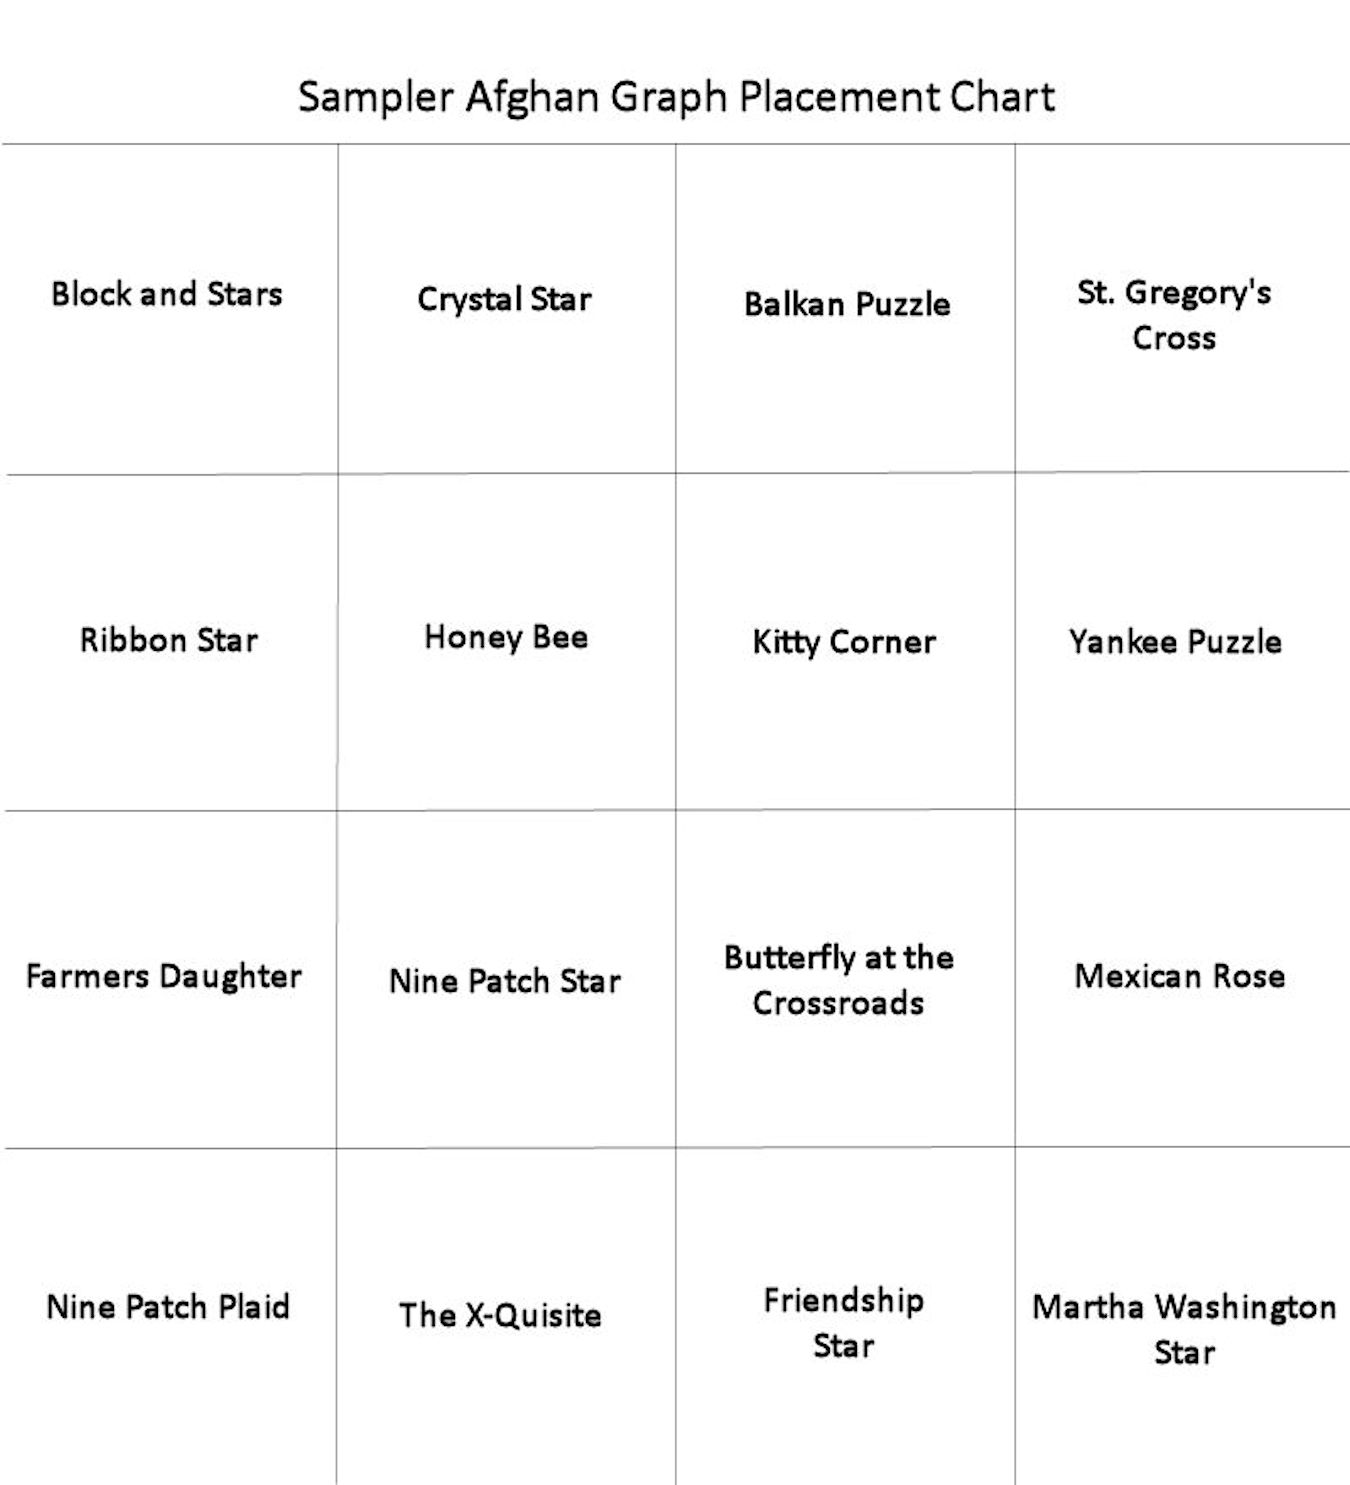 Sampler-Afghan-Chart2